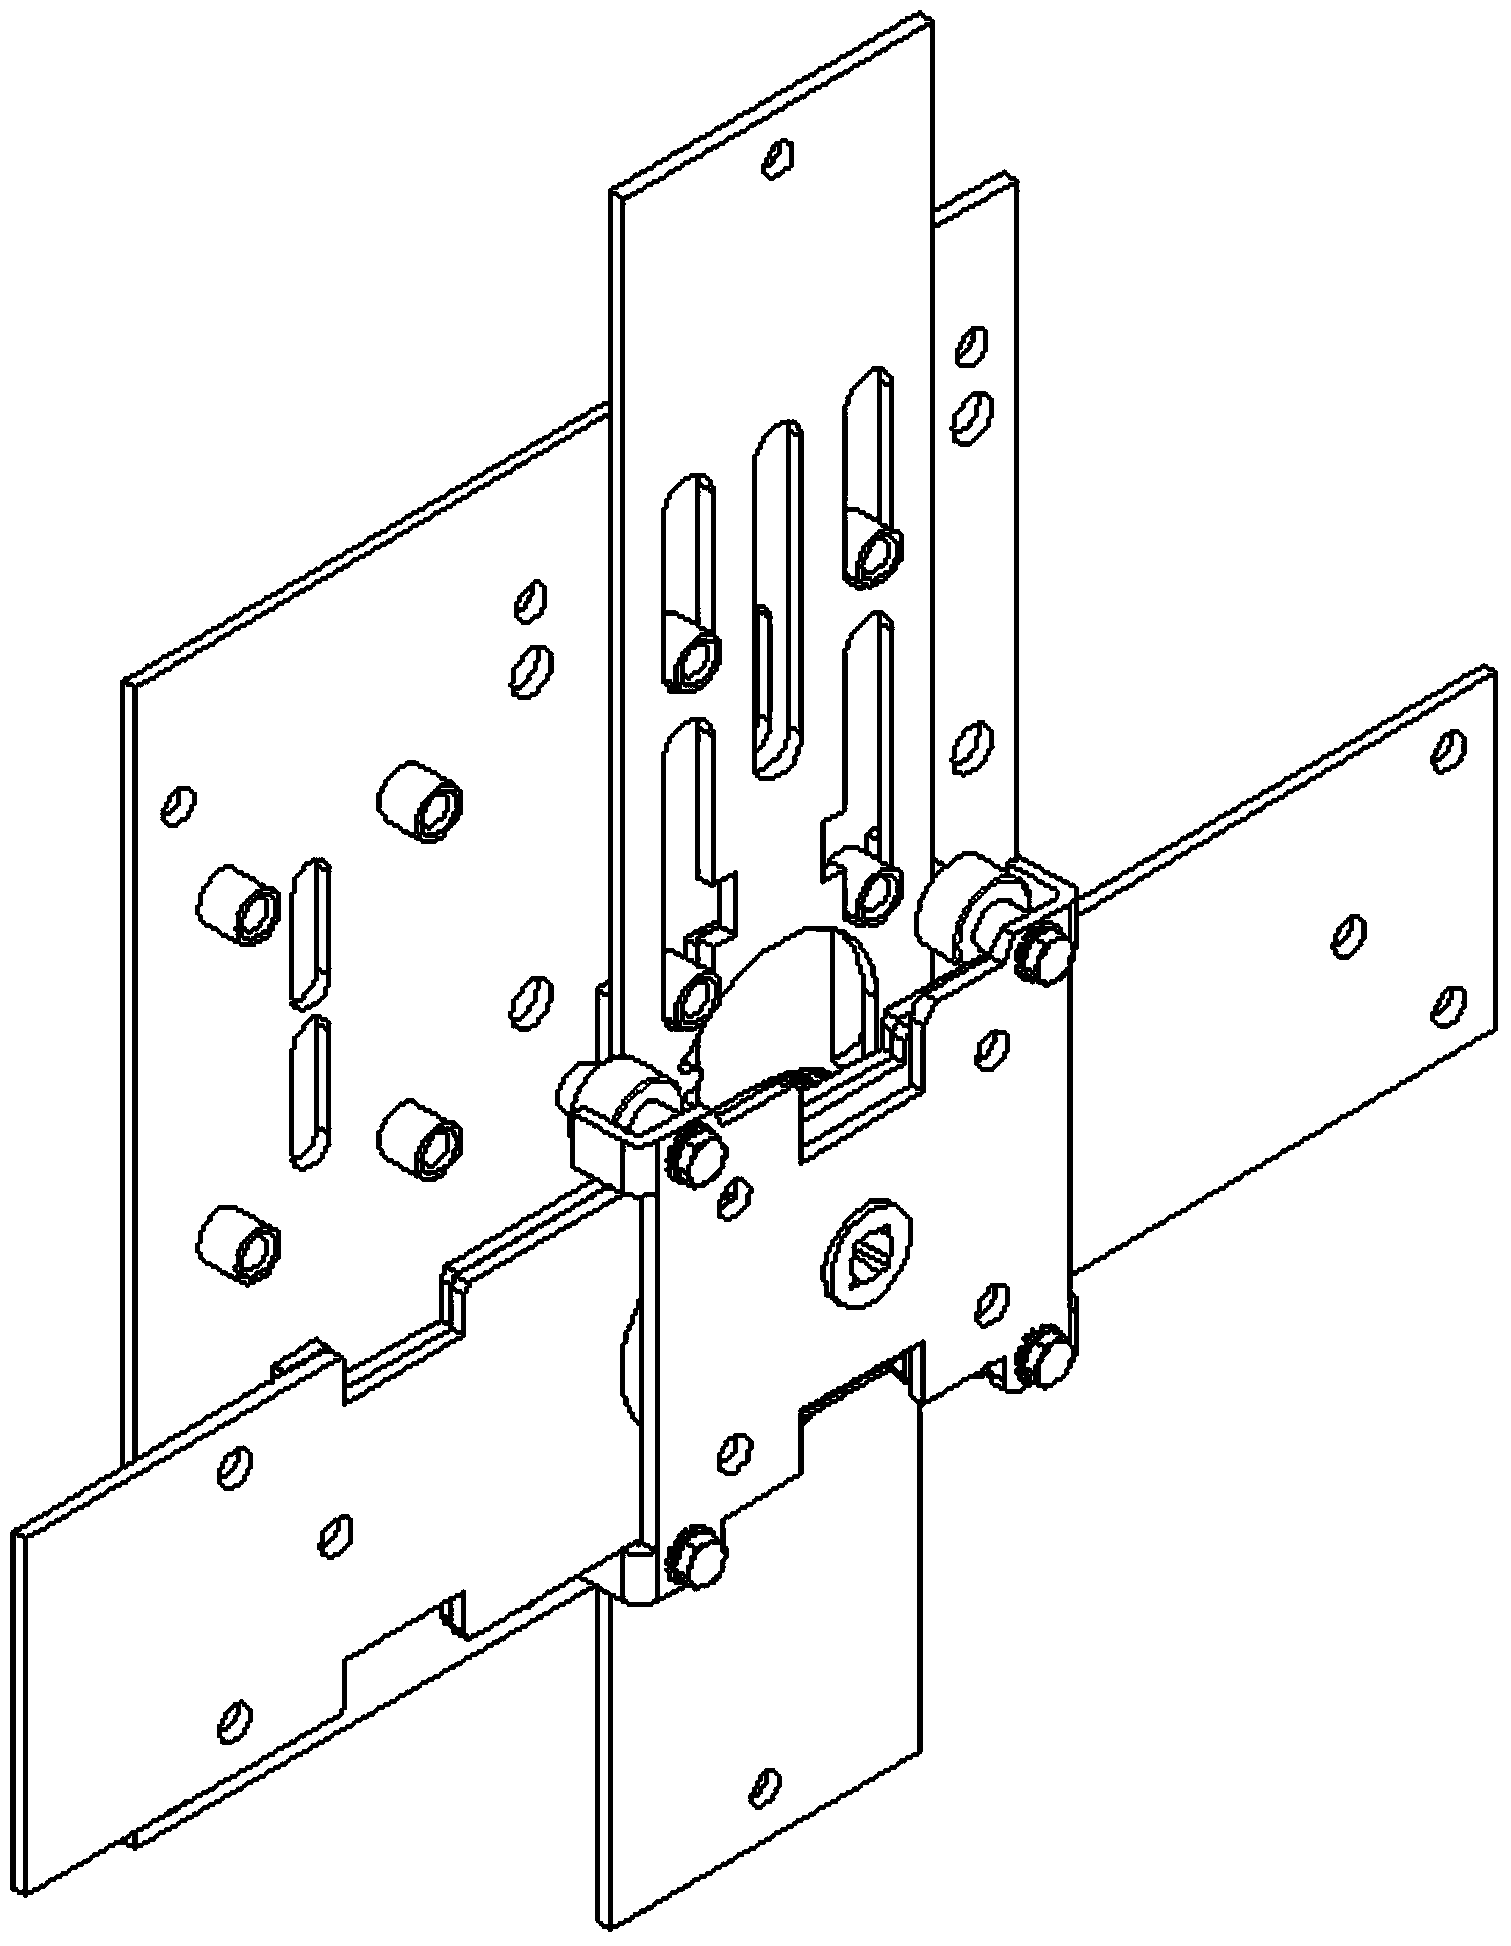 High anti-theft level double-lock modularization latch mechanism